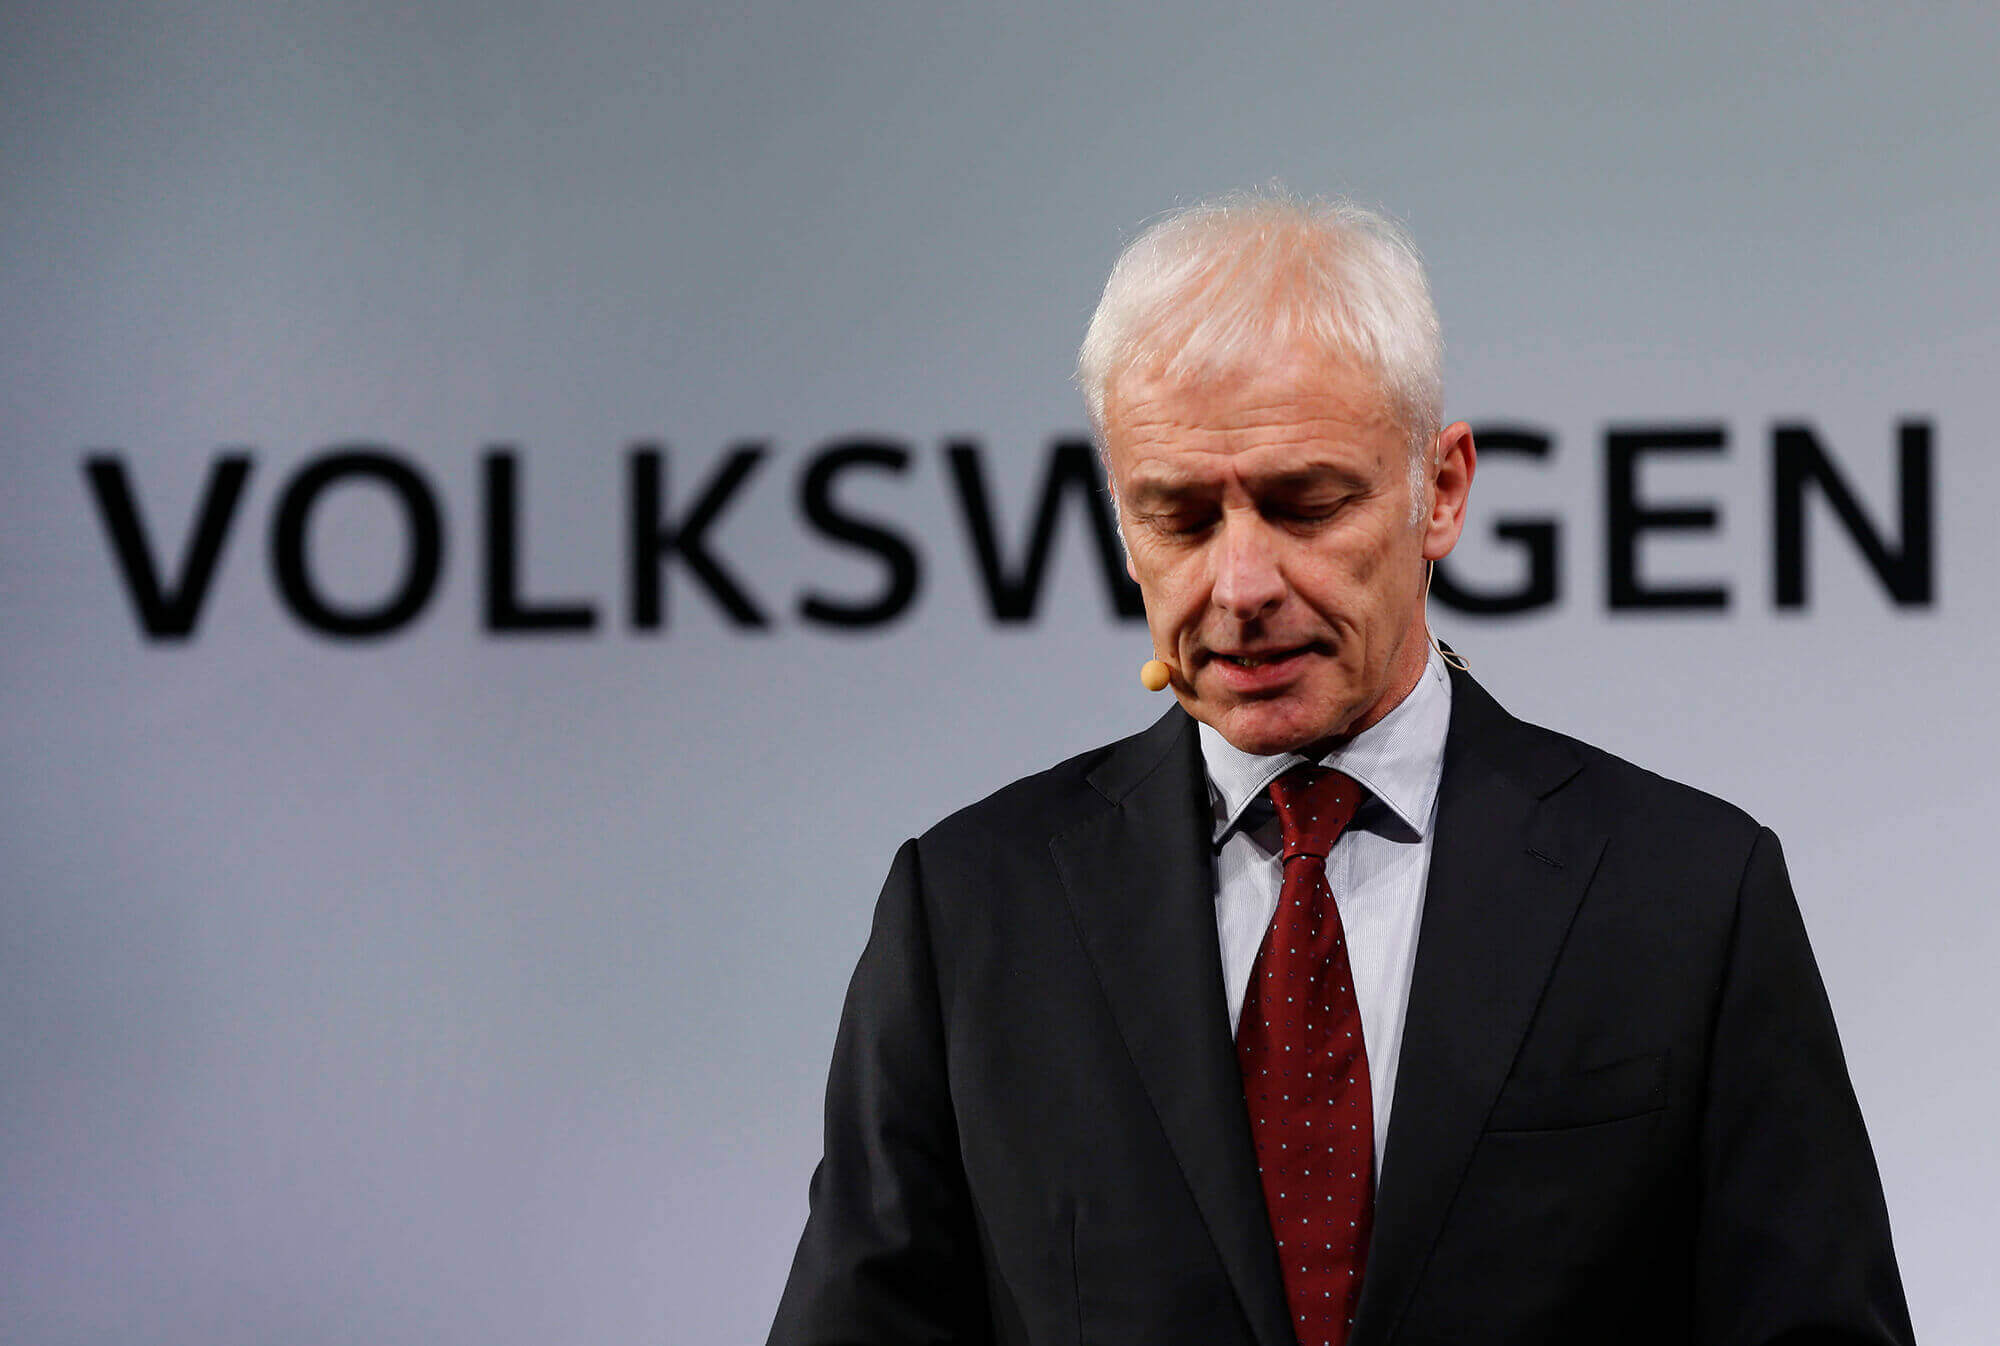 Volkswagen AG chief executive officer Matthias M?ller